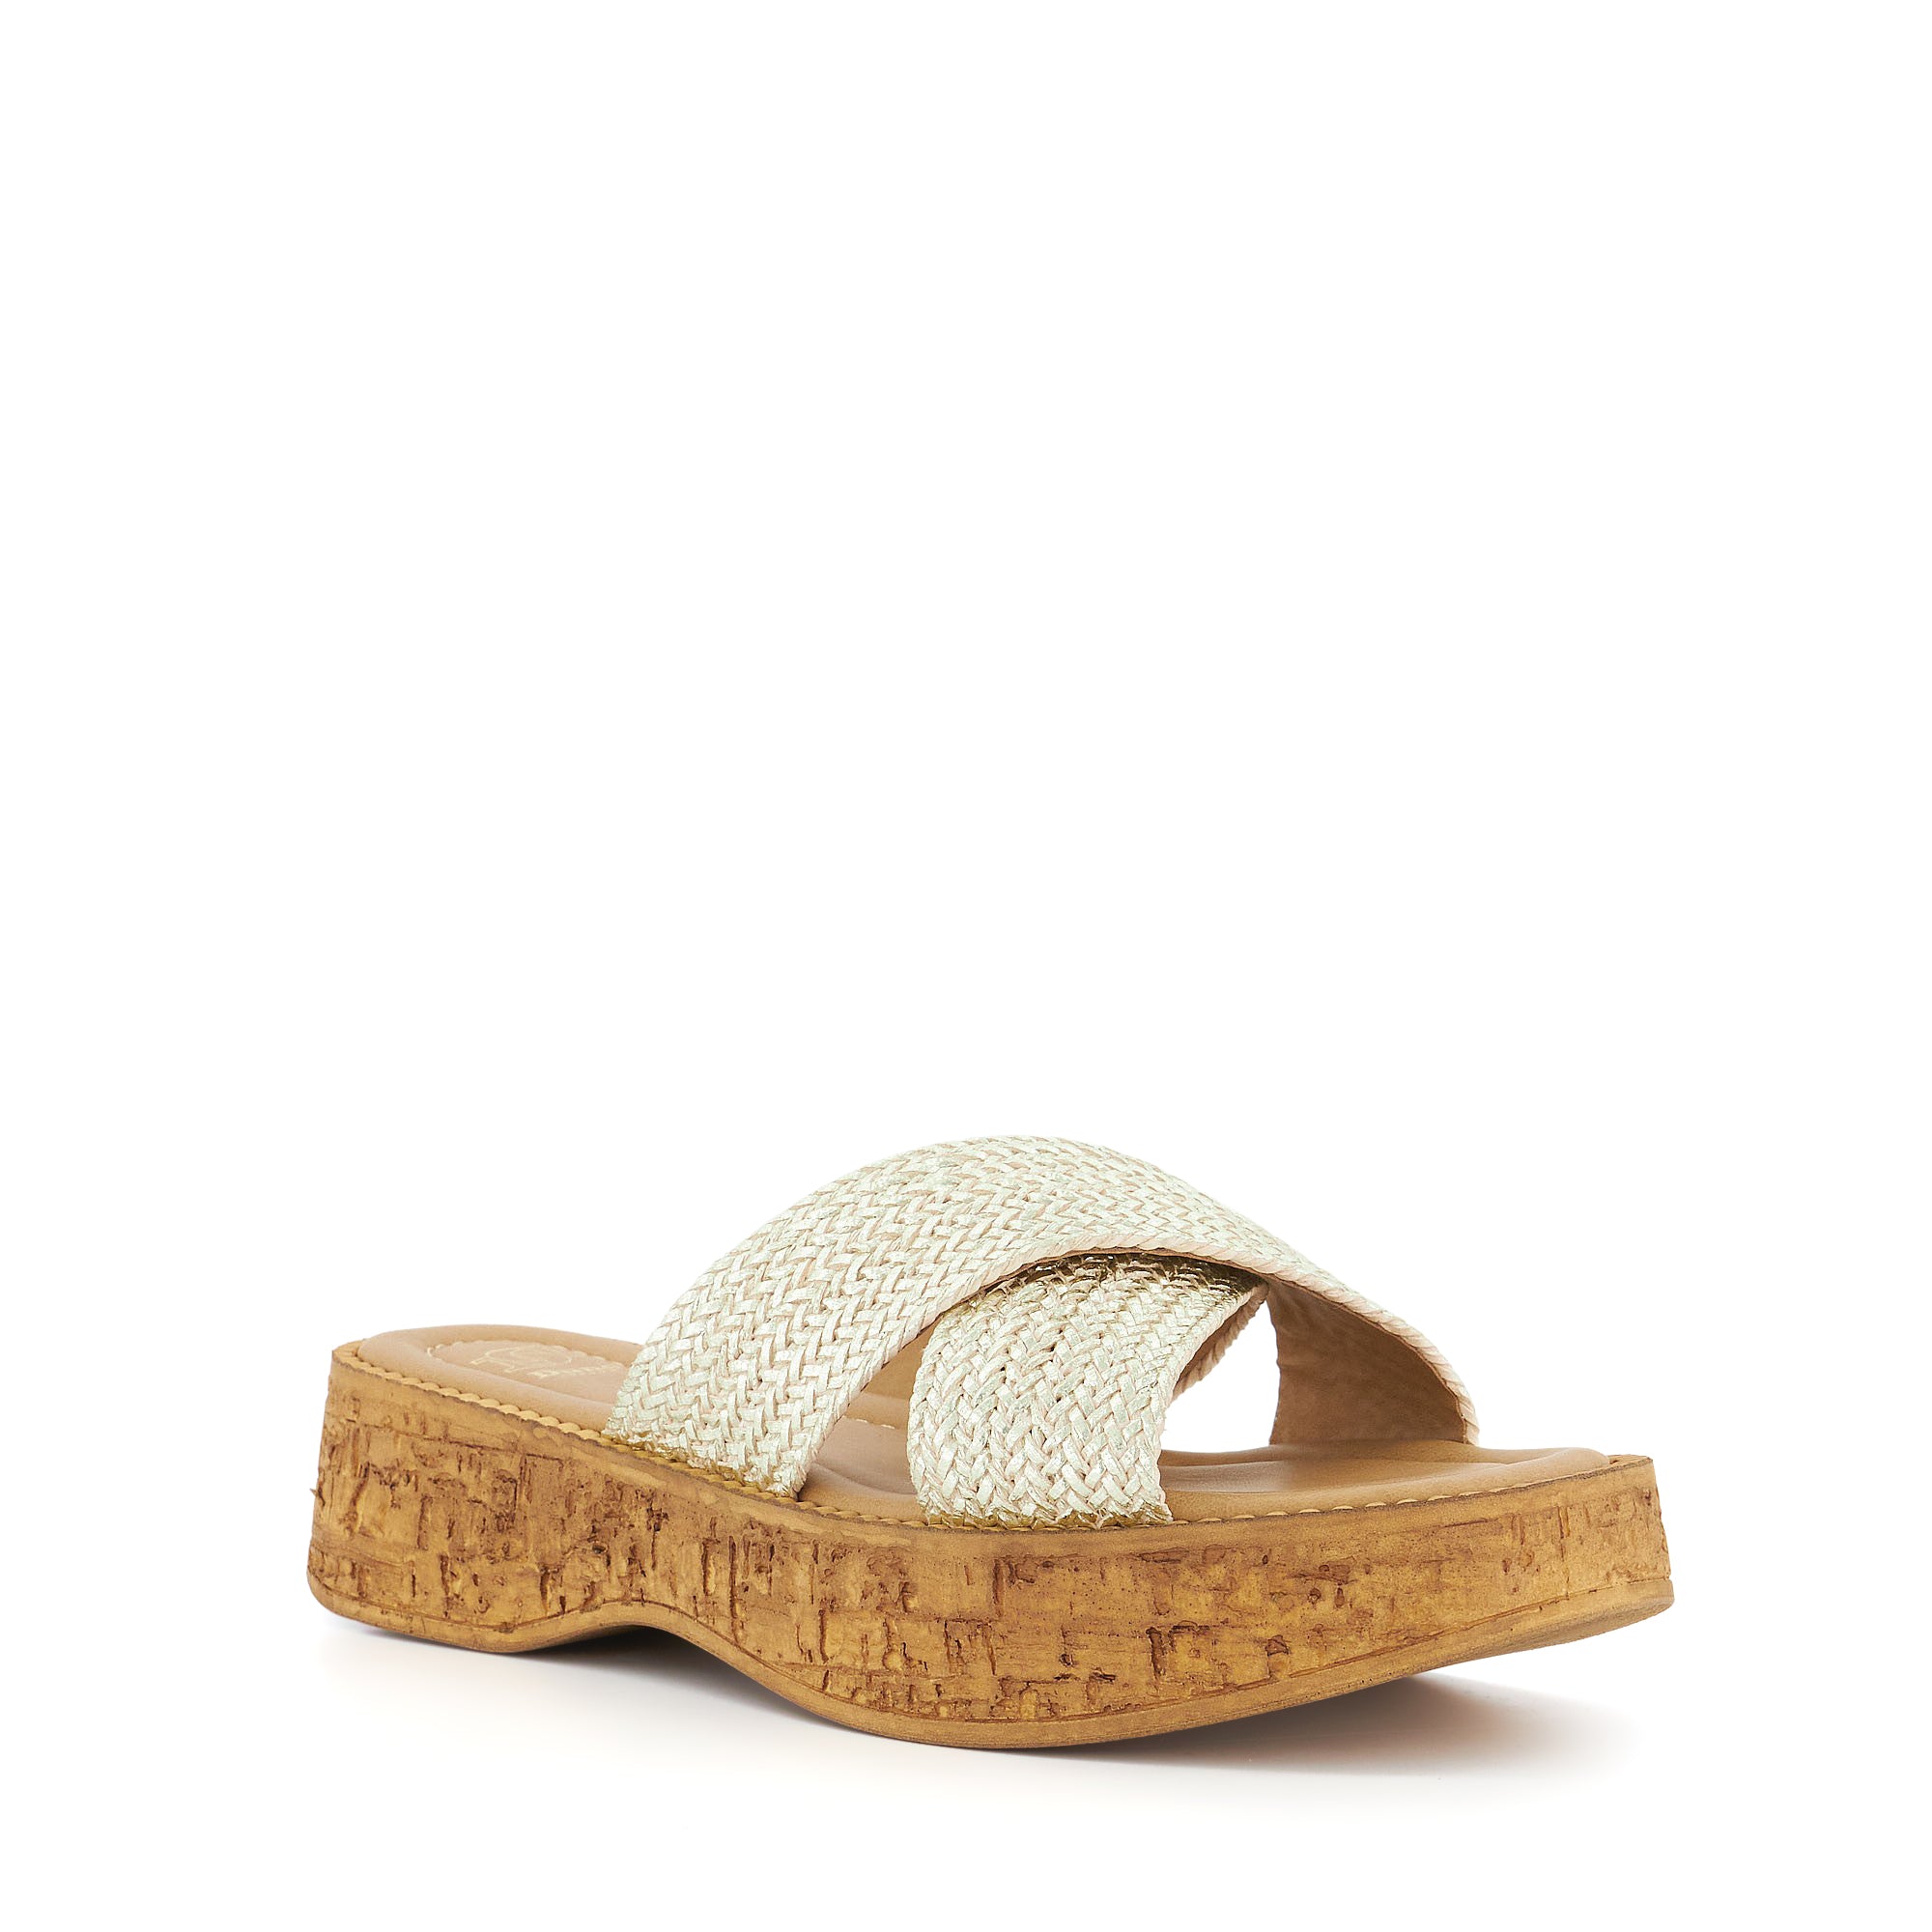 KODAK - Braided Strap Wedge Sandals